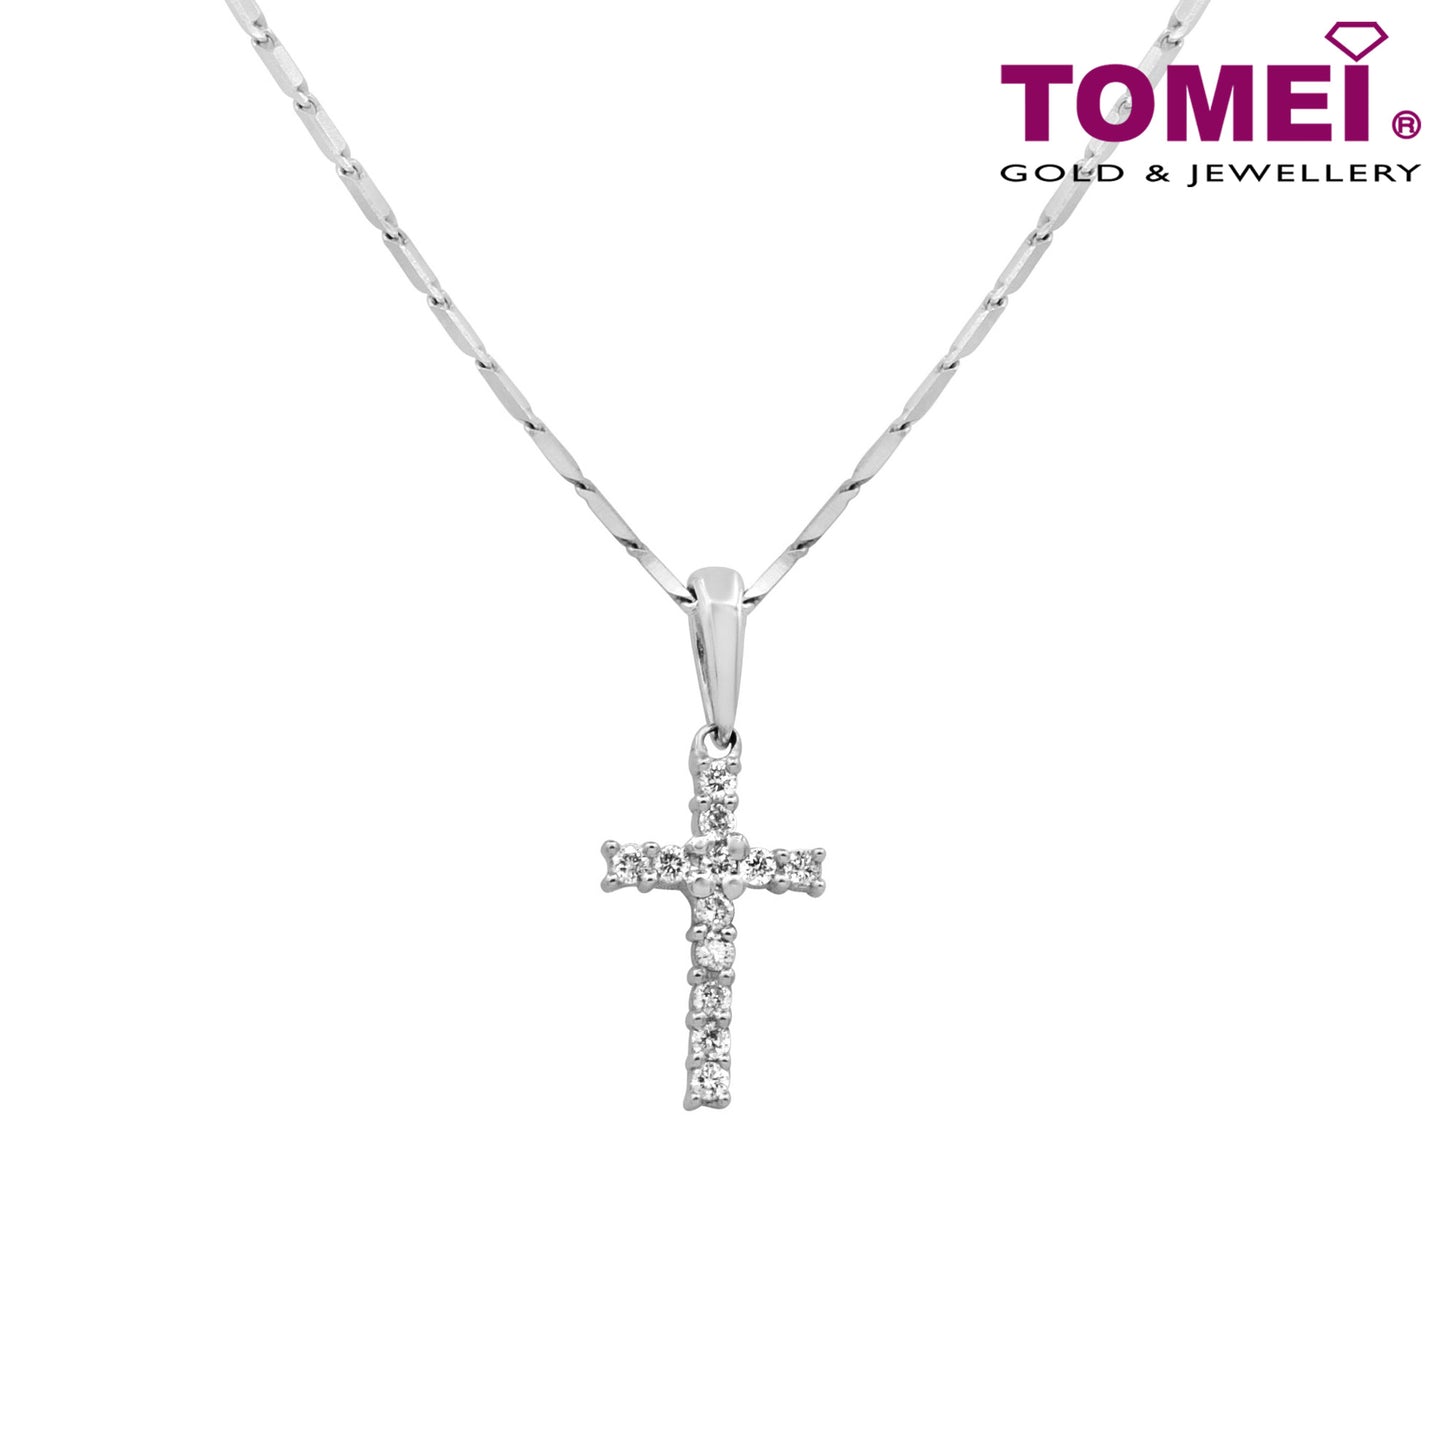 Tomei White Gold 585 (14K) "Light of Faith" Diamond Pendant with Chain (P2713)